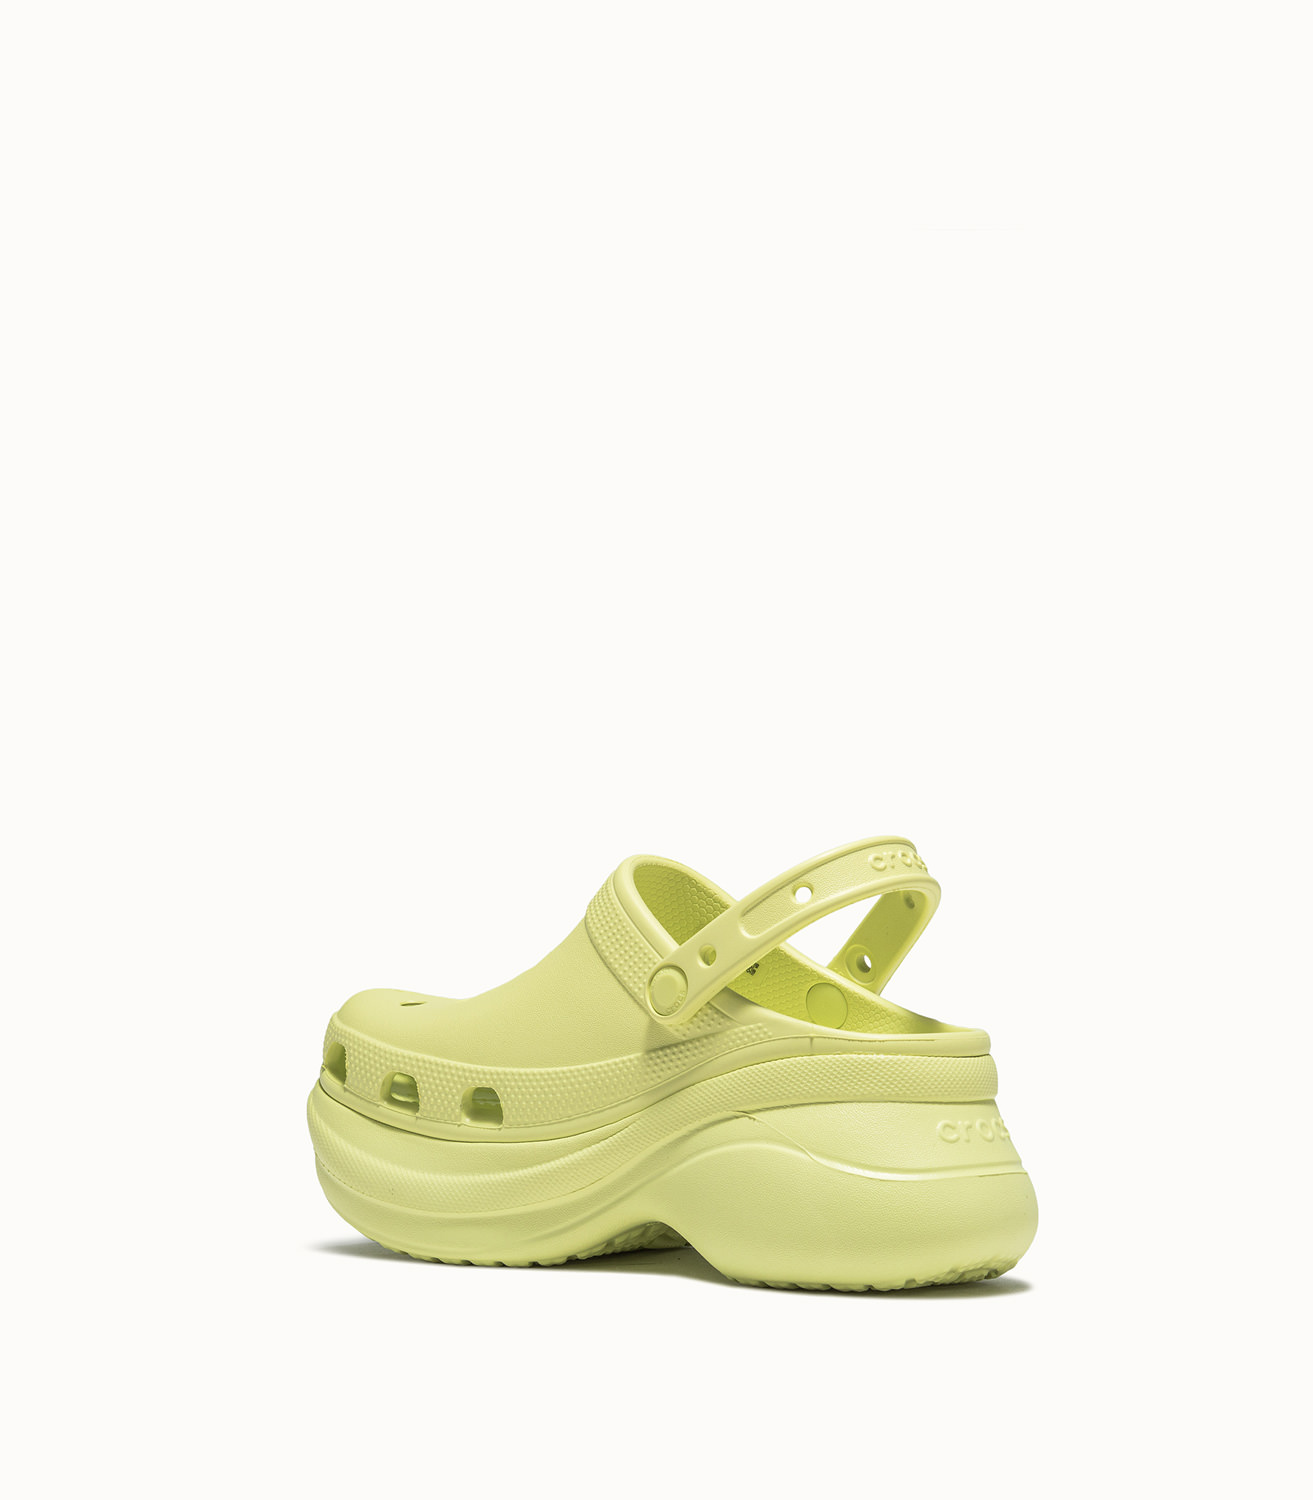 bae crocs yellow